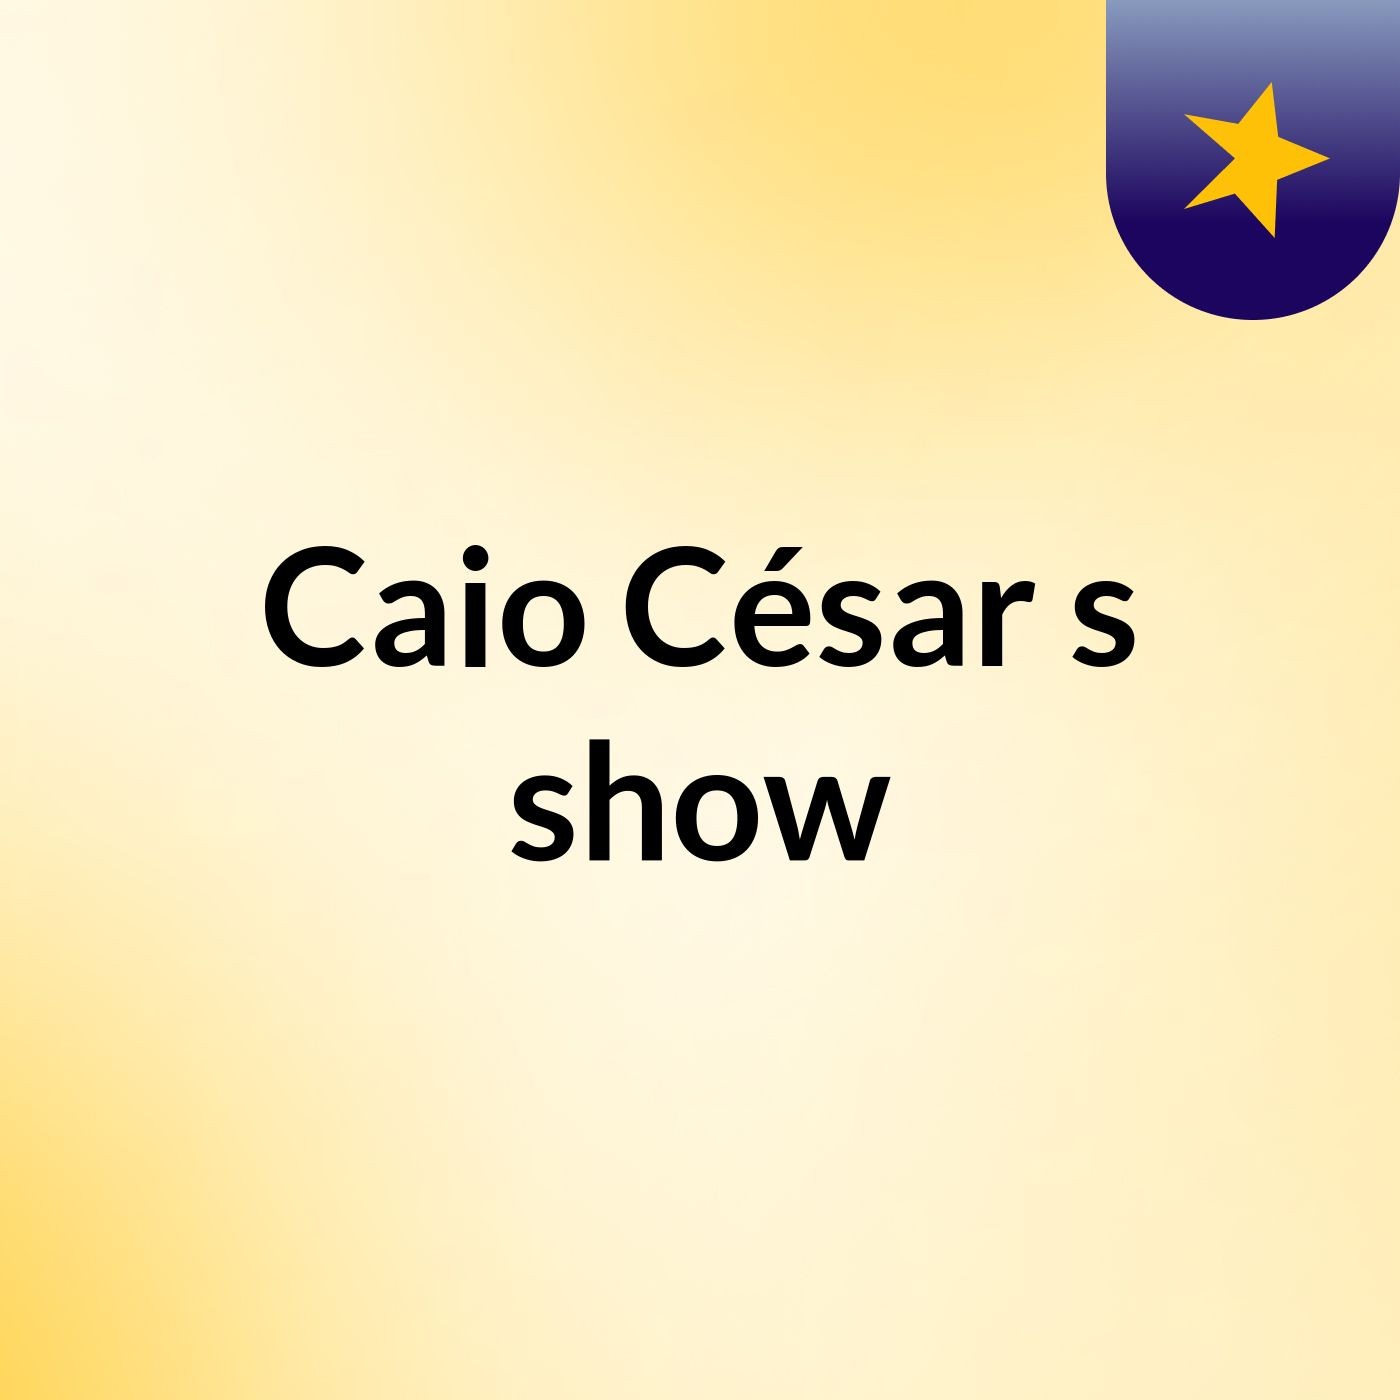 Caio César's show